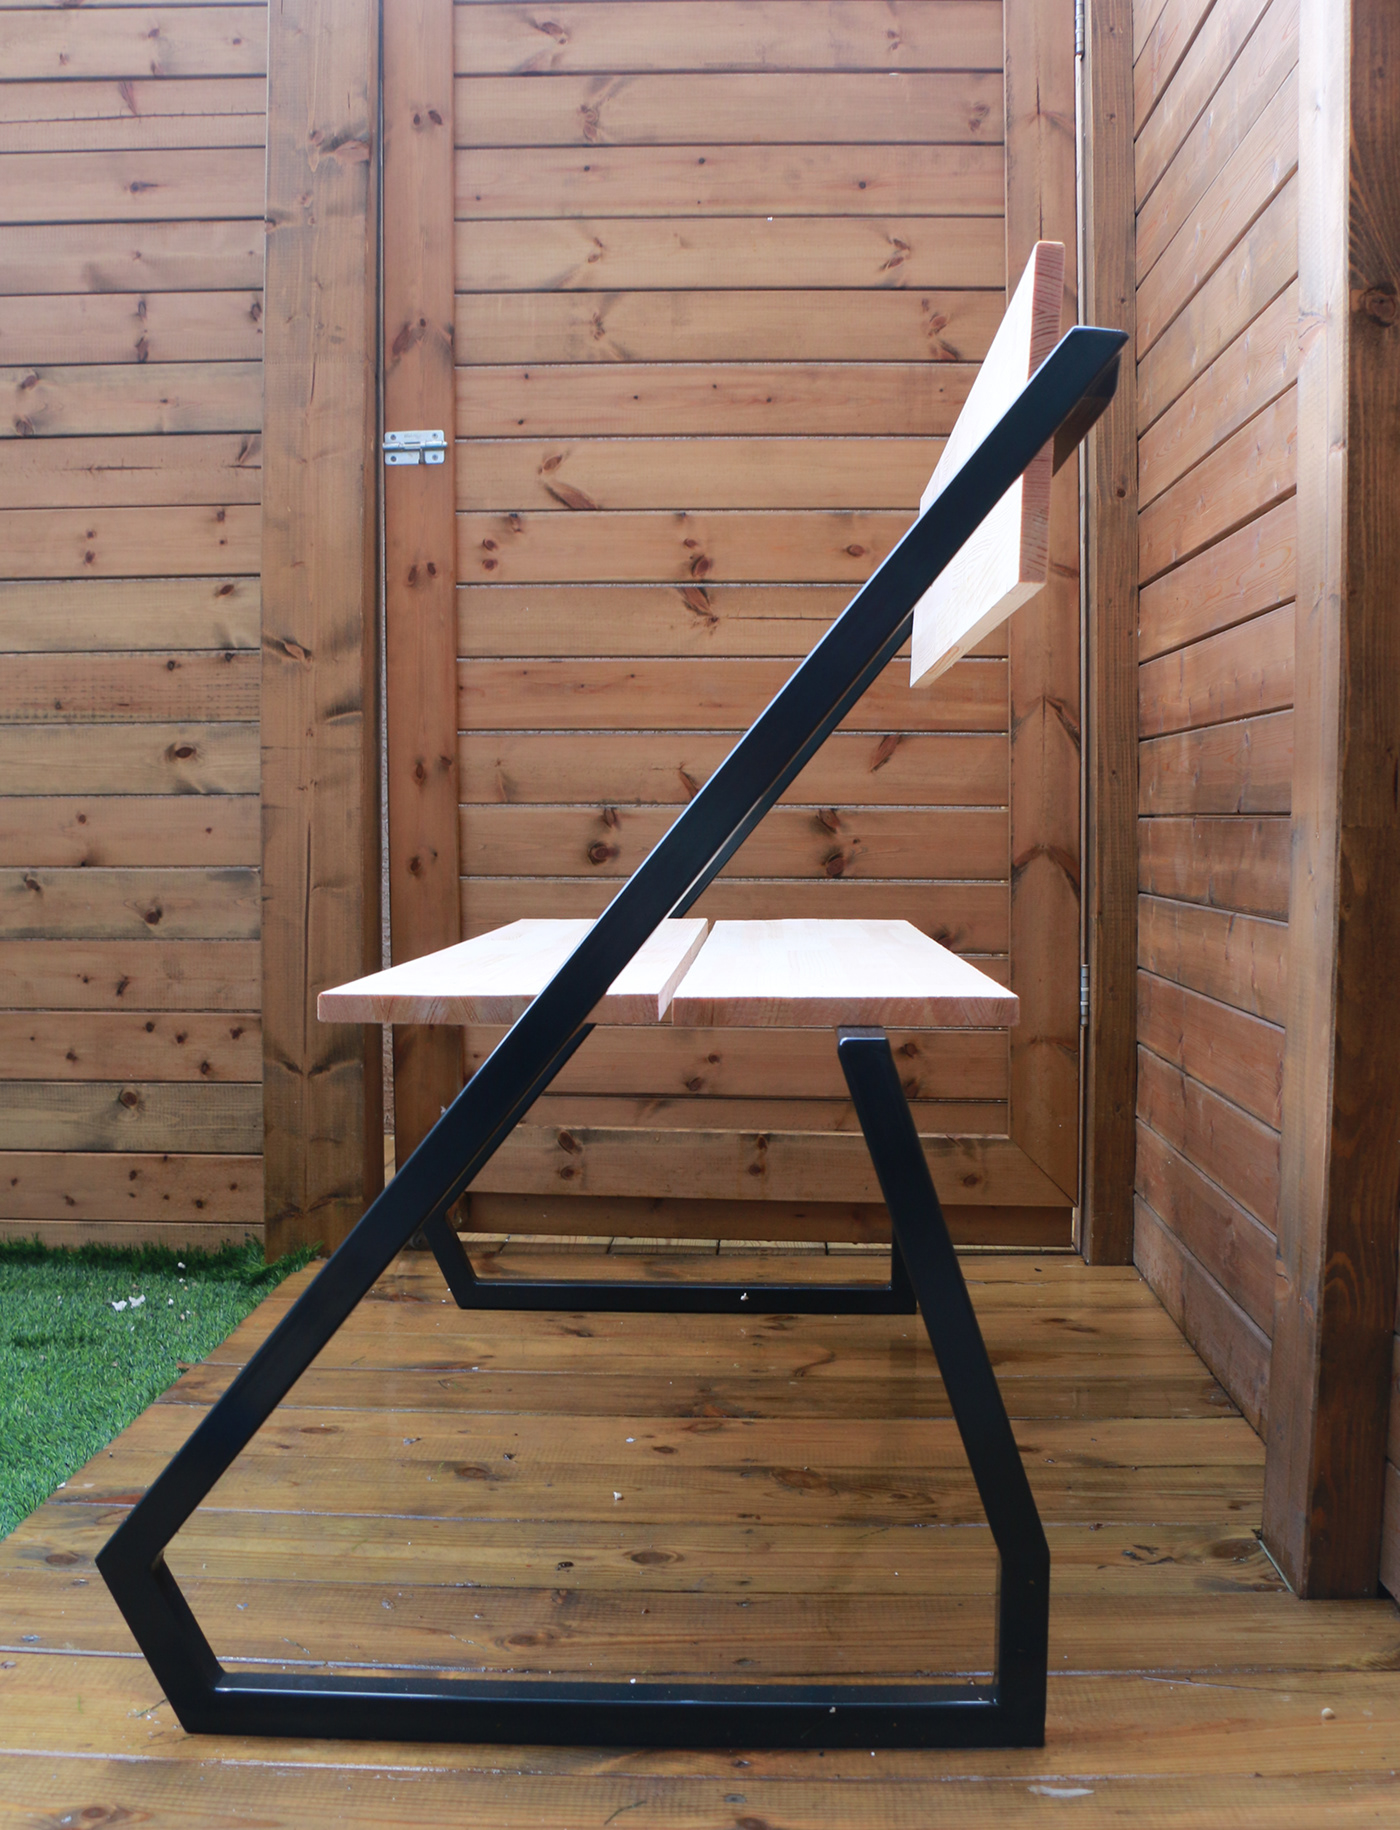 furniture industrial design  metal ברכי גוזי wood yard bench מתכת ספסל חצר עיצוב תעשייתי עץ רהיטים